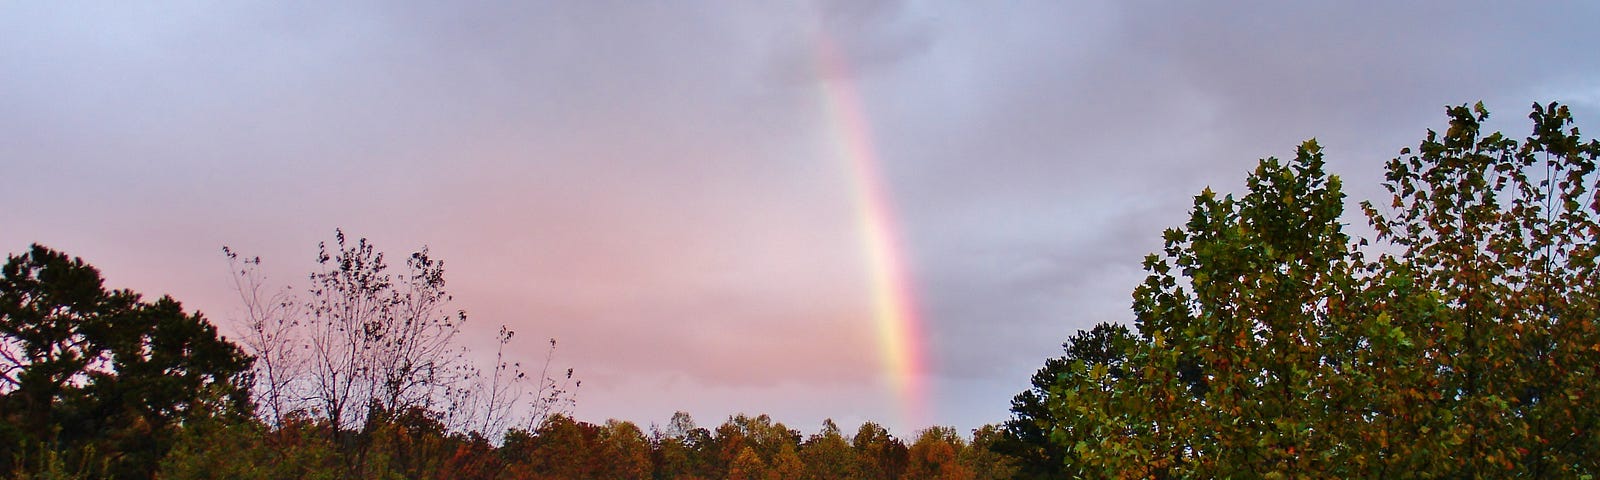 Rainbow against dark sky, trees at bottom.